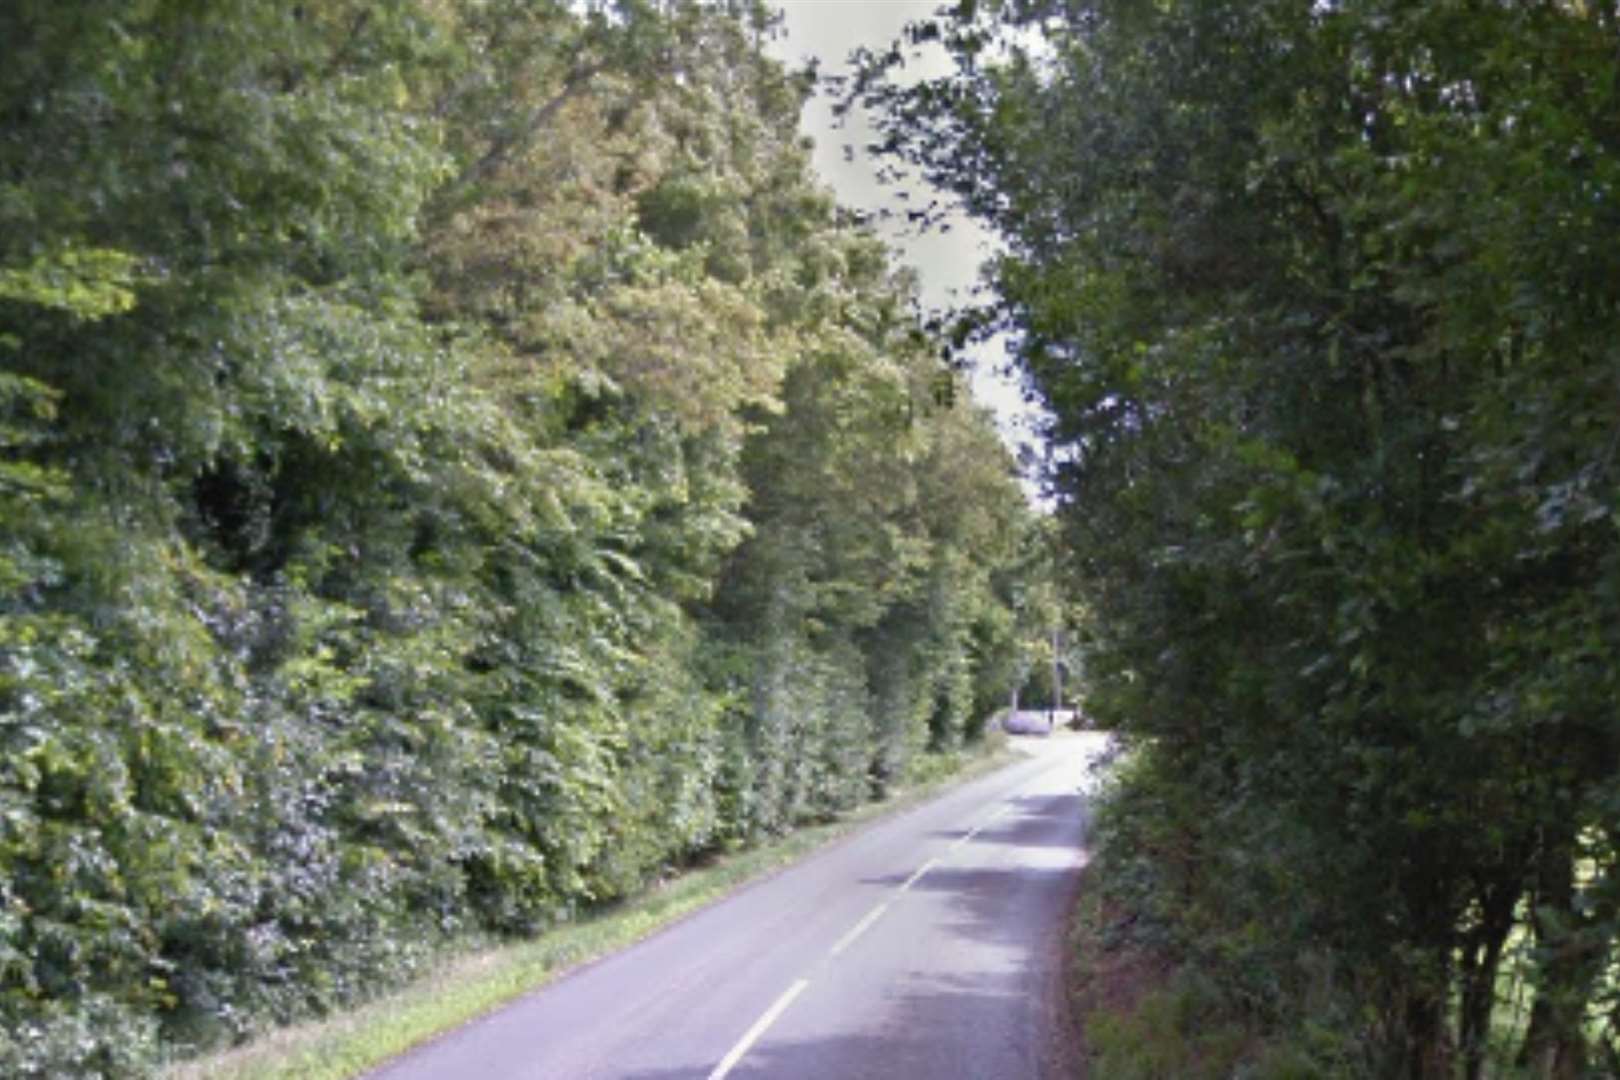 The crash happened on the B2067 near Woodchurch. Photo: Google Street View